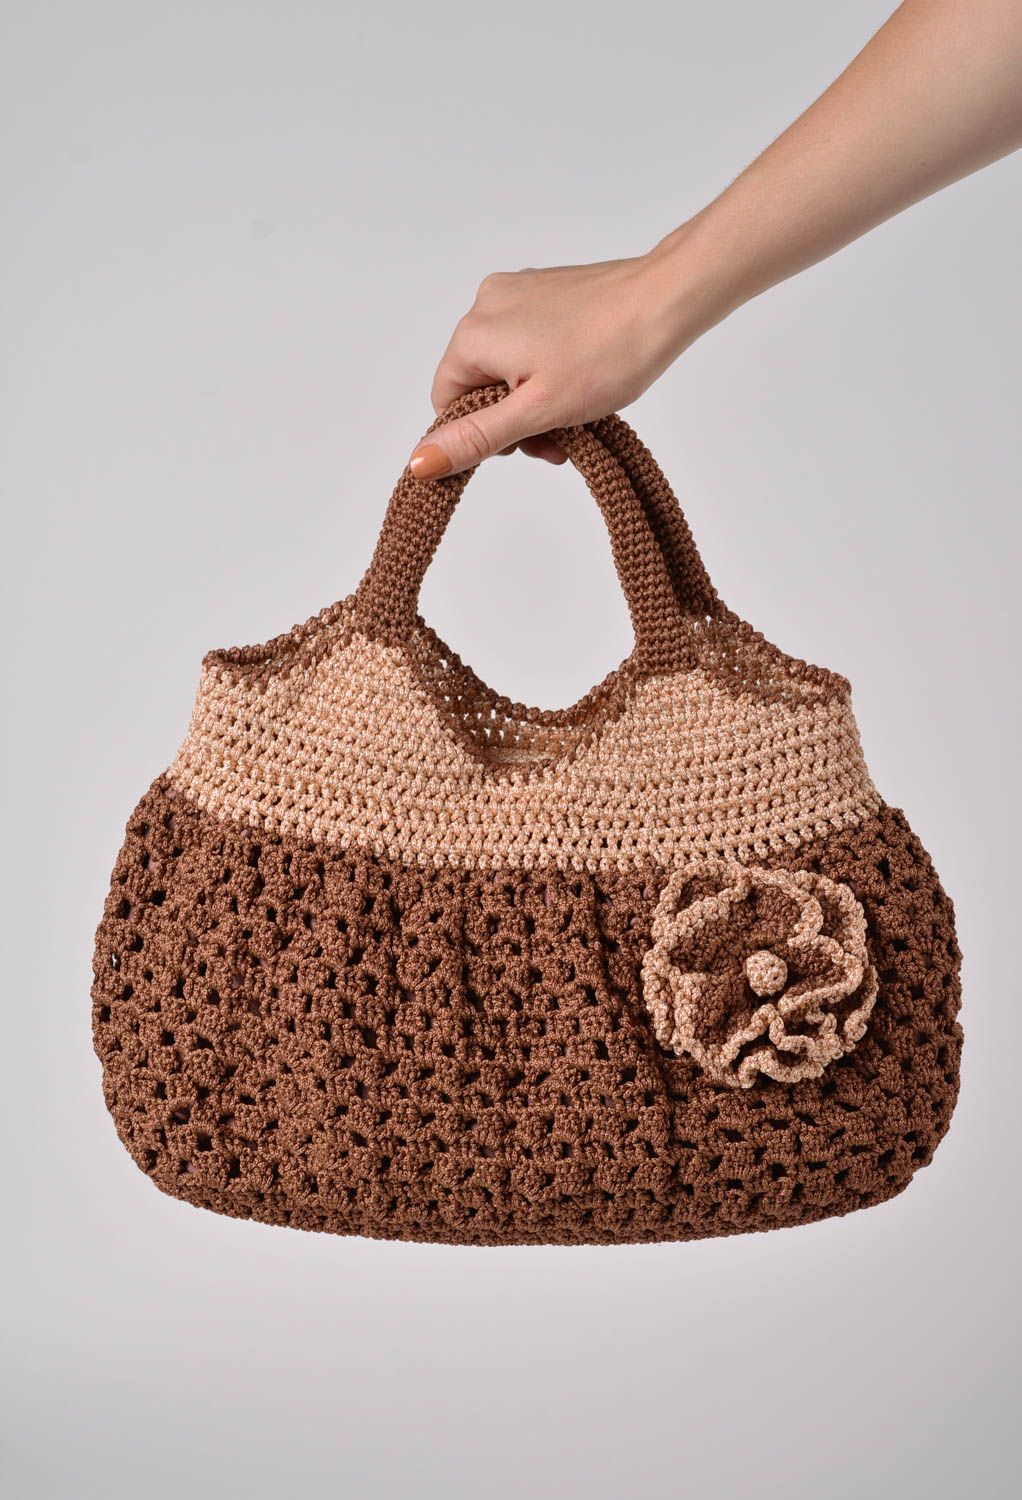 Crocheted female stylish brown handbag designer handmade purse for women photo 2